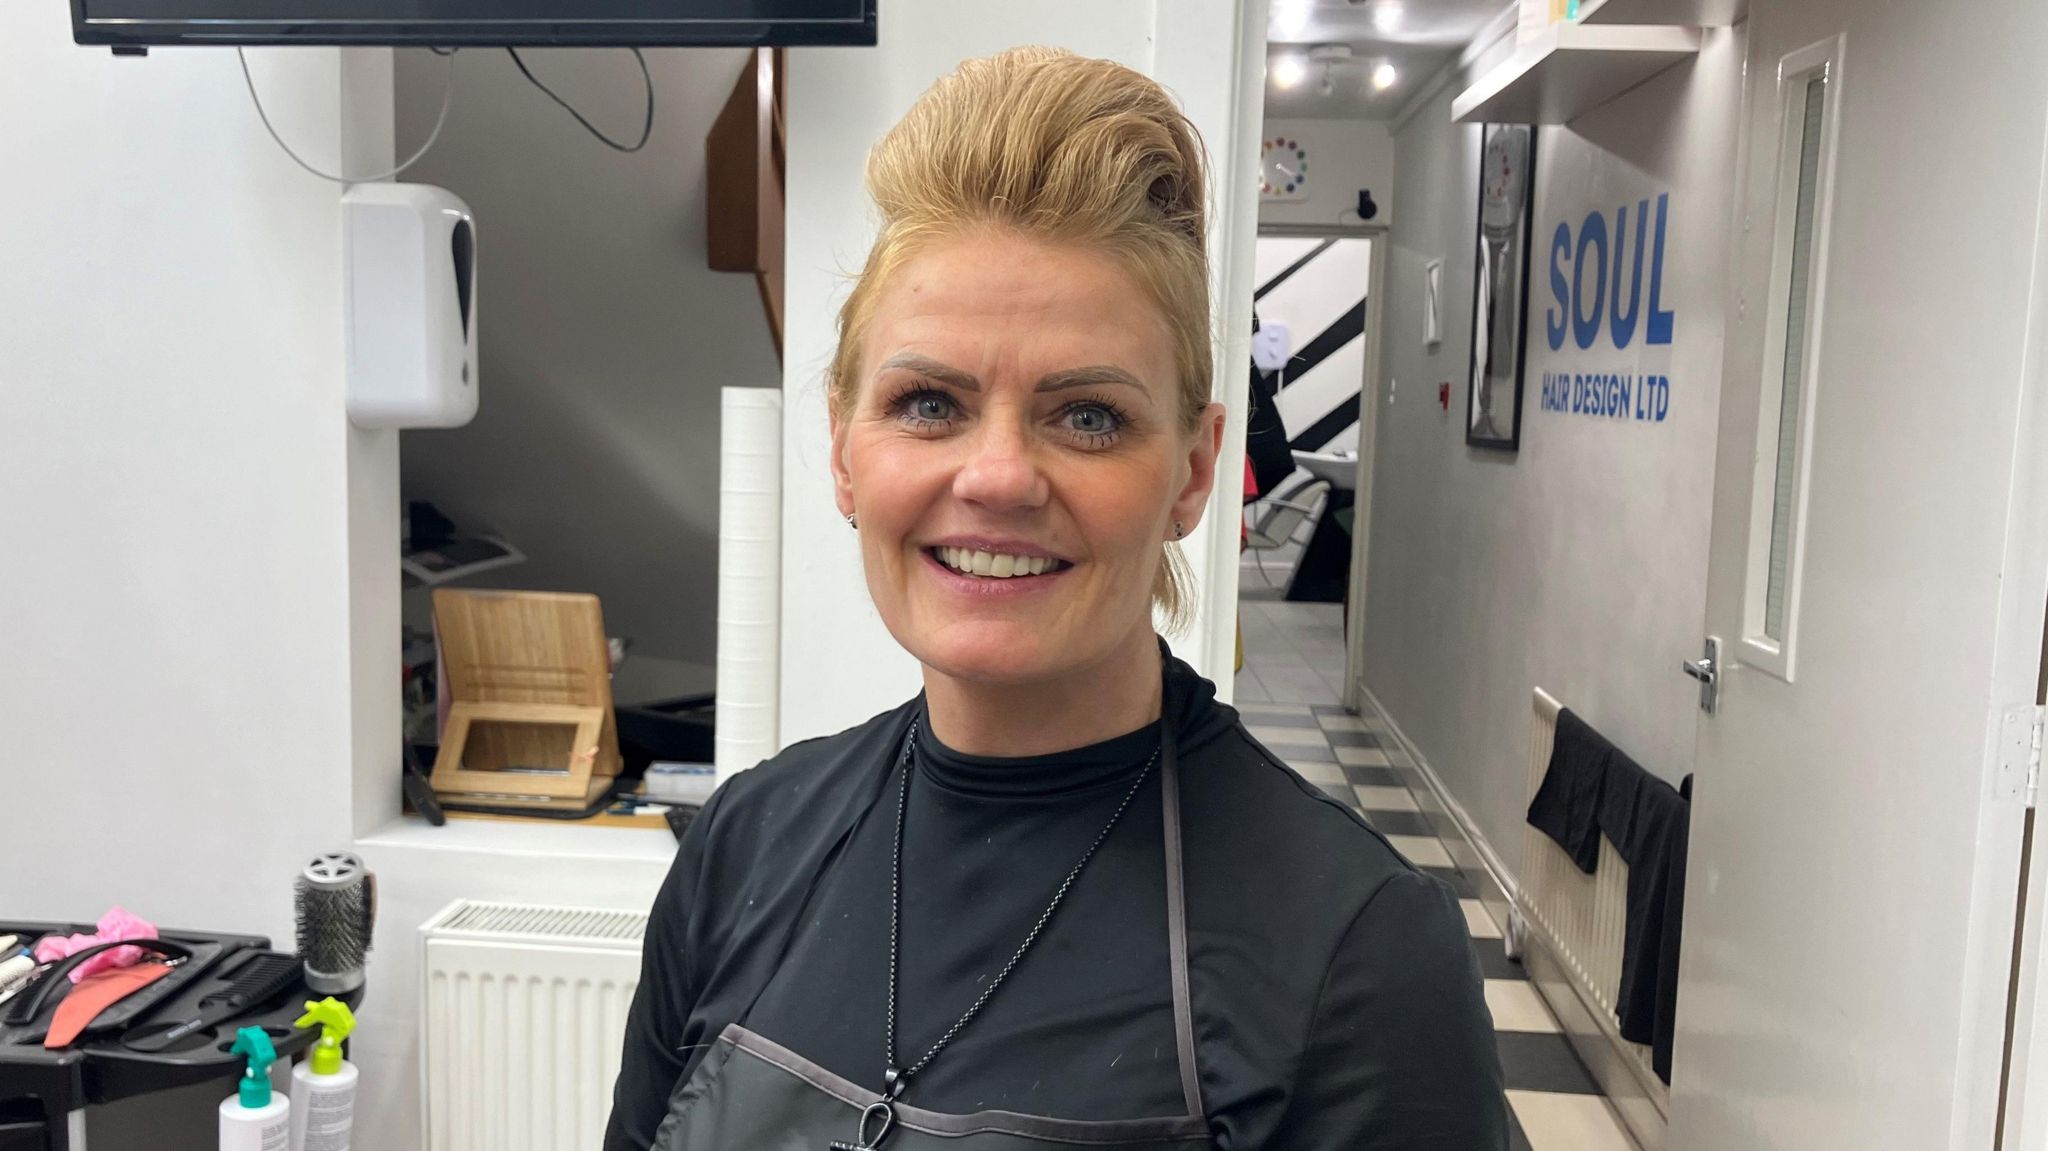 Hairdresser Denise Hall stands in her salon